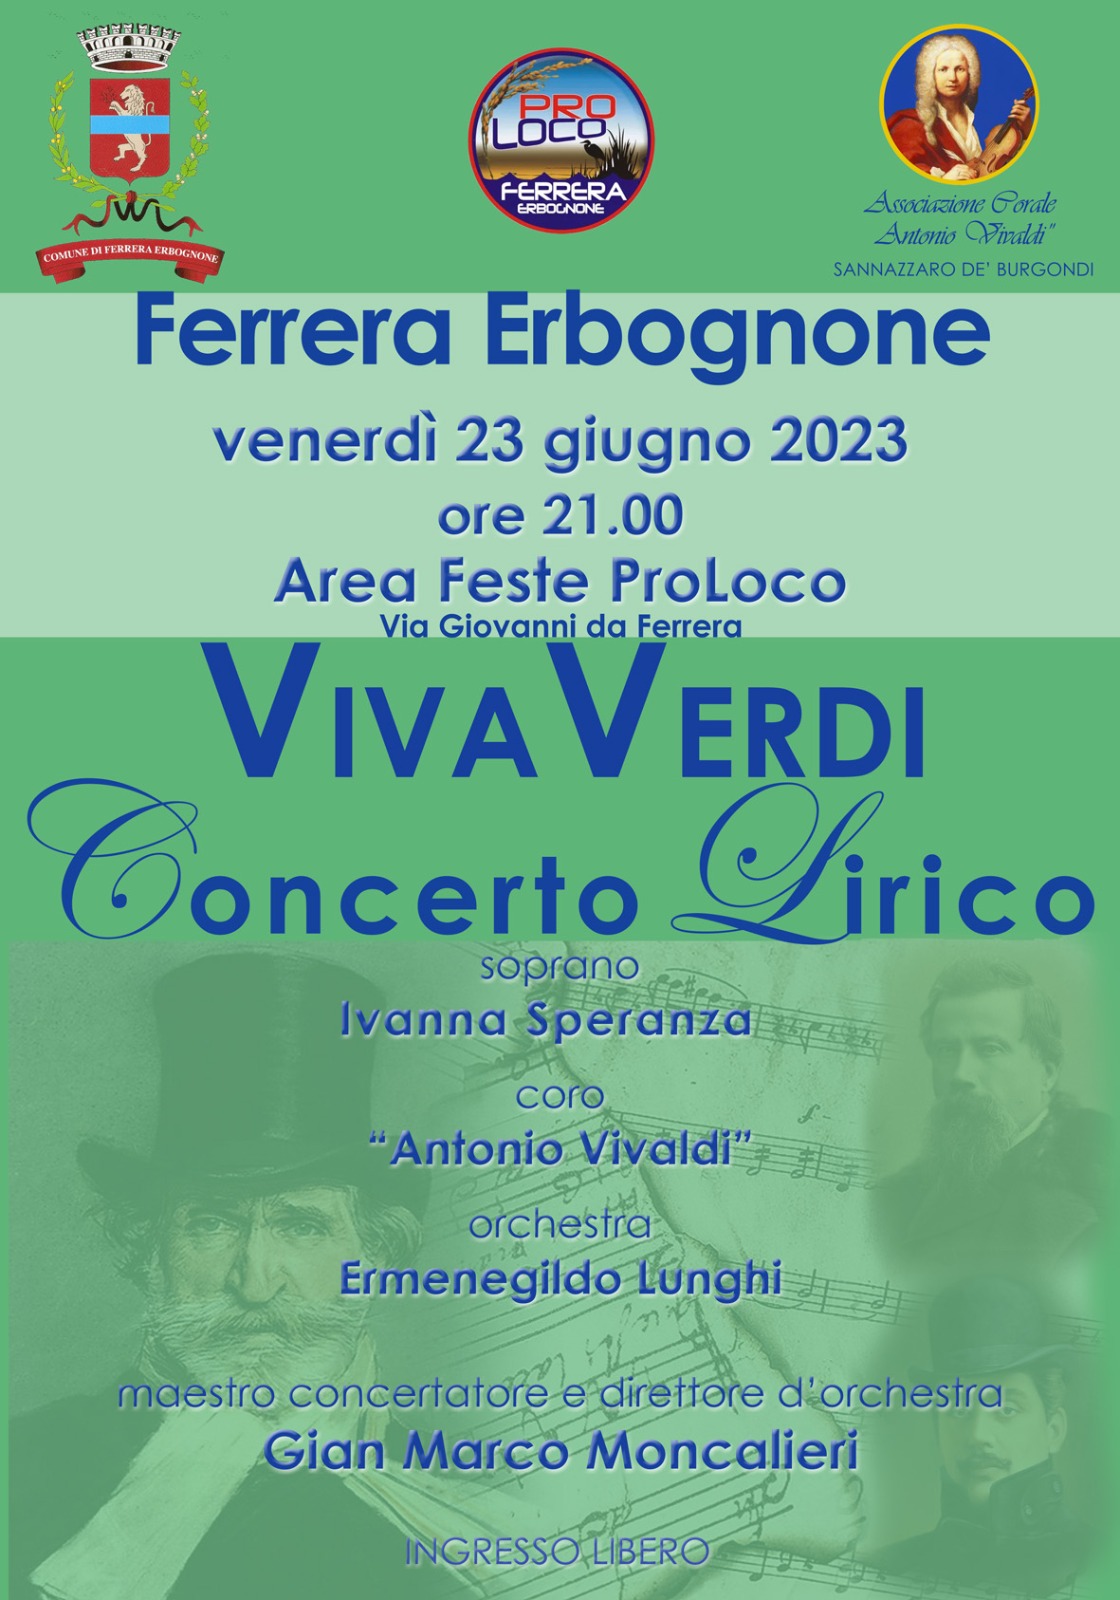 Viva Verdi Ferrera Erbognone 2023